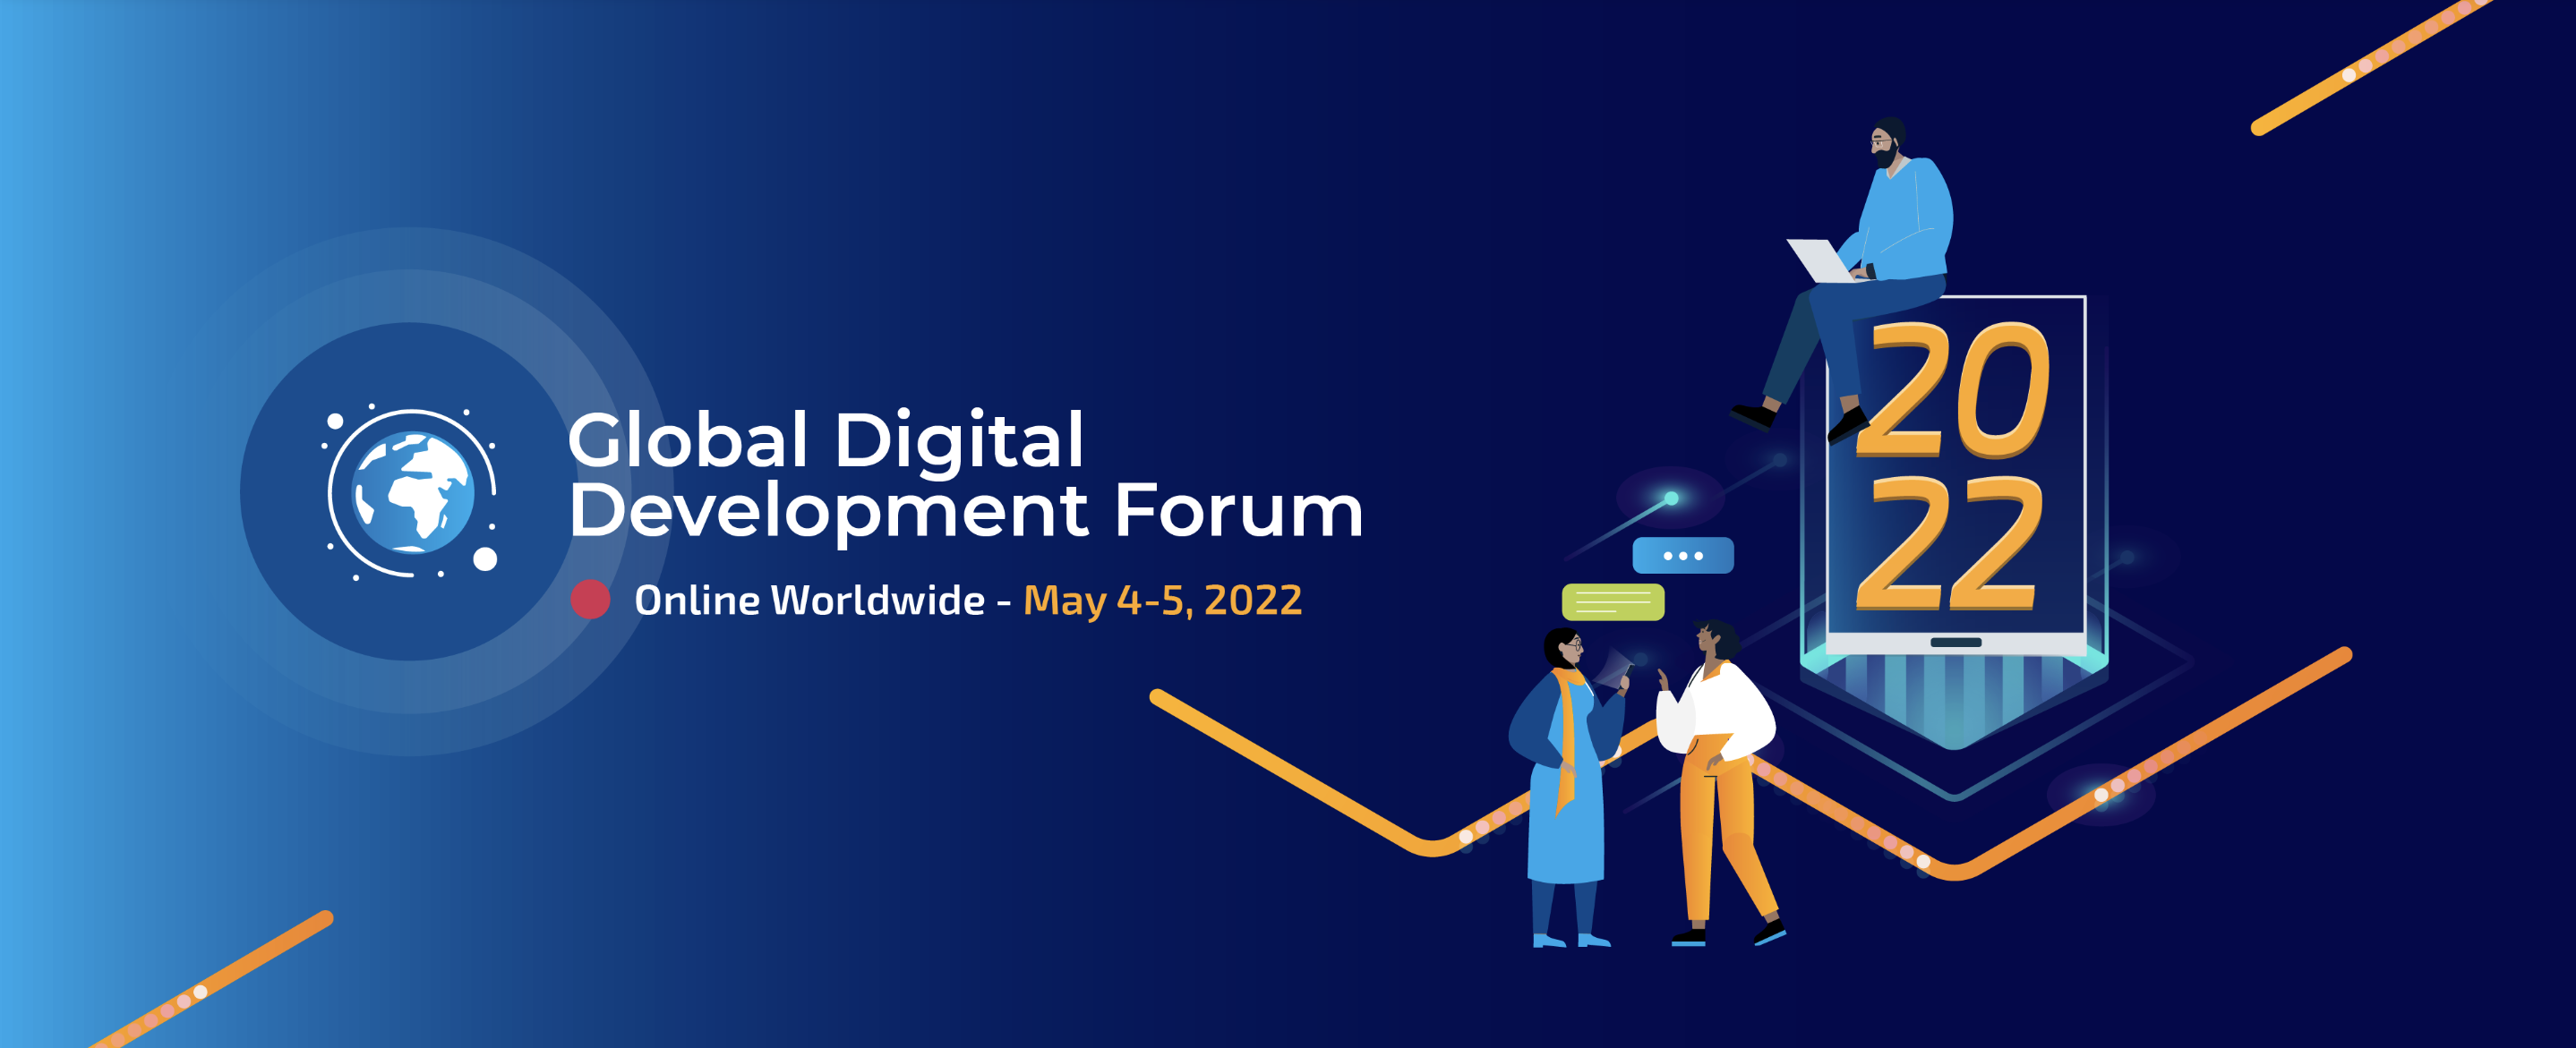 Lim May-Ann spoke at the Global Digital Development Forum 2022